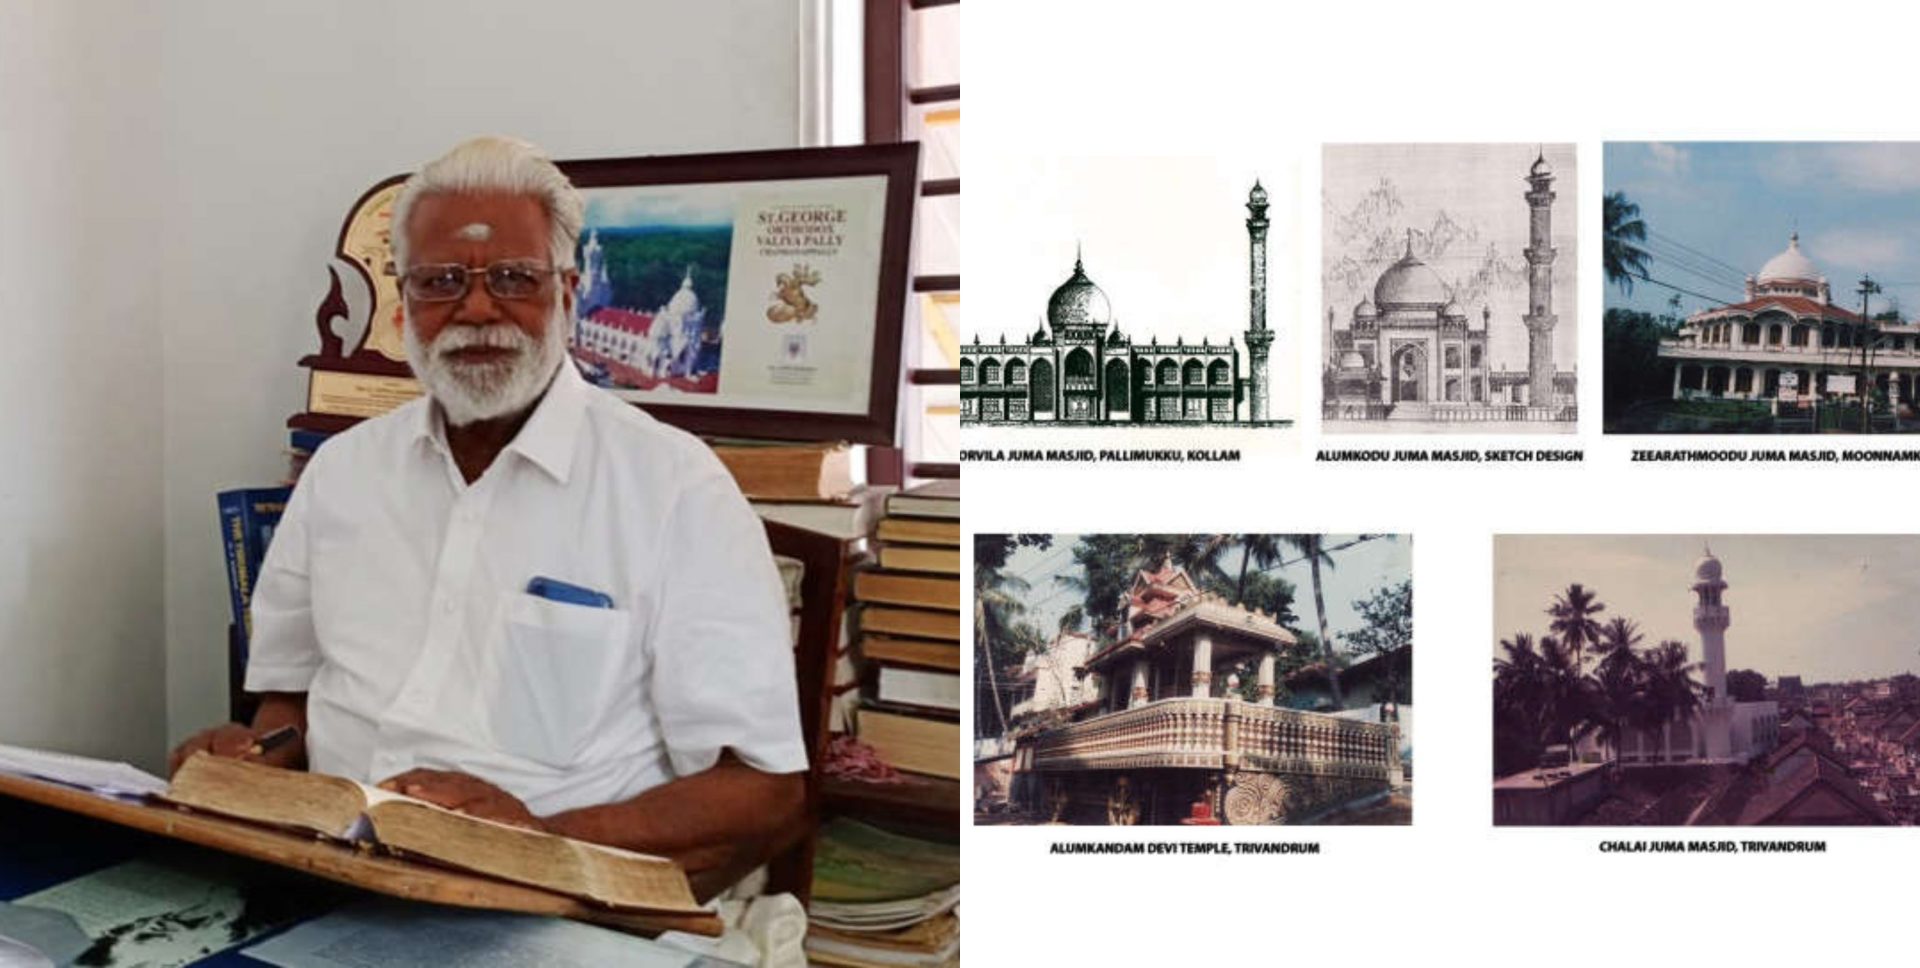 Govinda Gopalakrishnan Hindu architect Mosque Man India